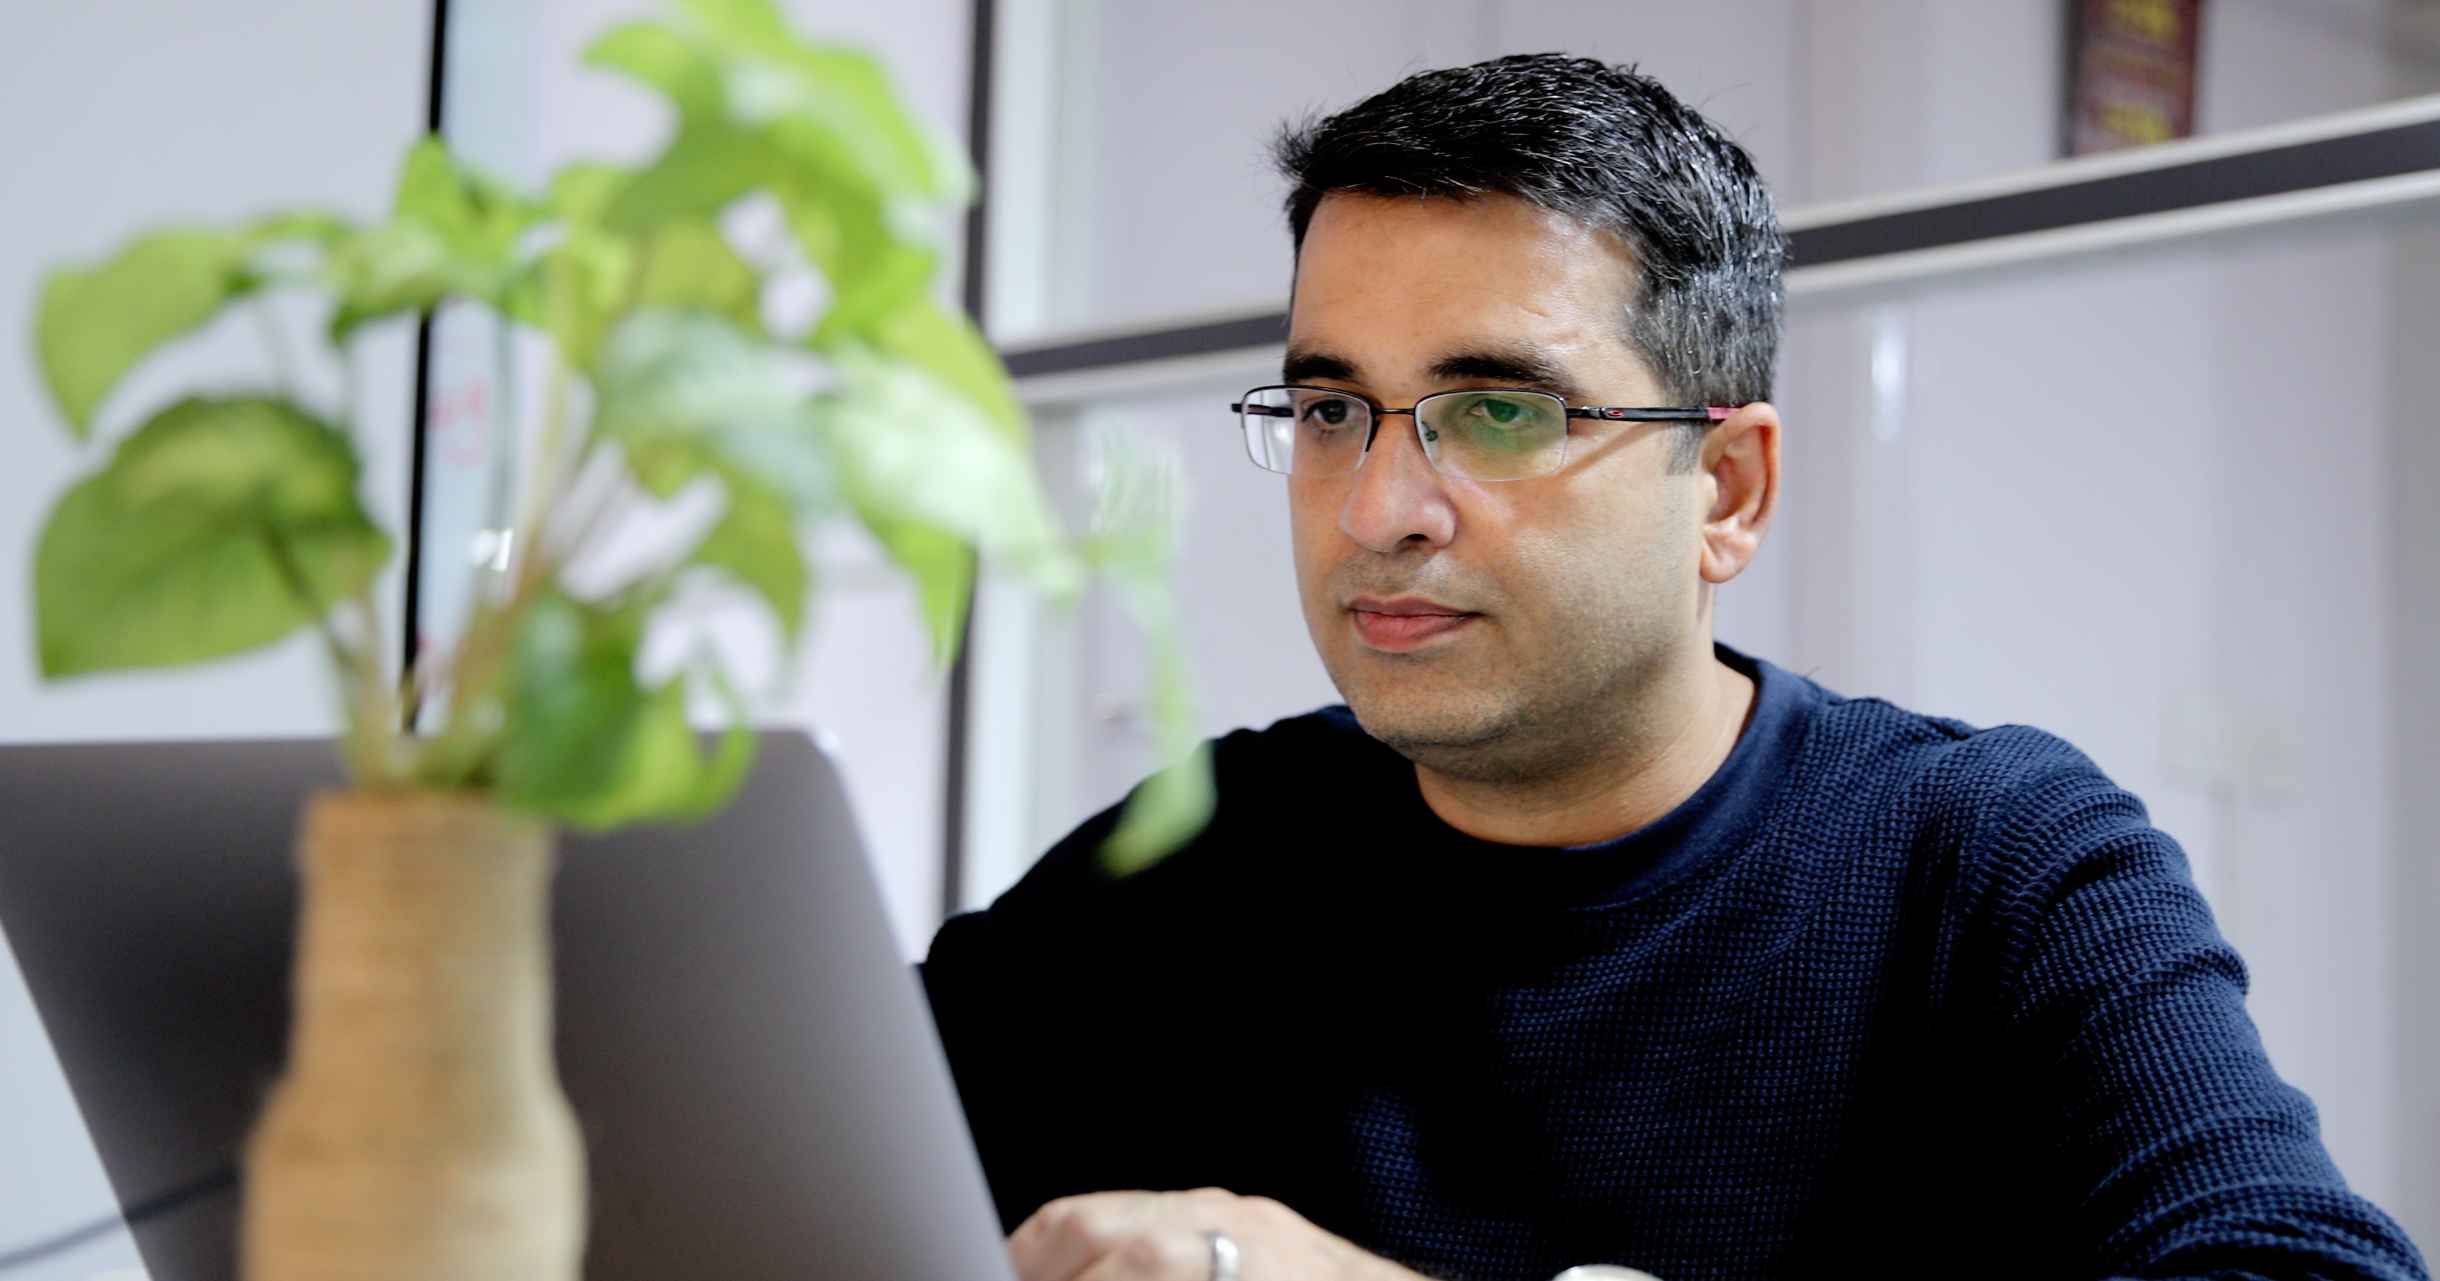 Gaurav Narang has created a CityGreens company that helps farmers increase productivity through hydroponics